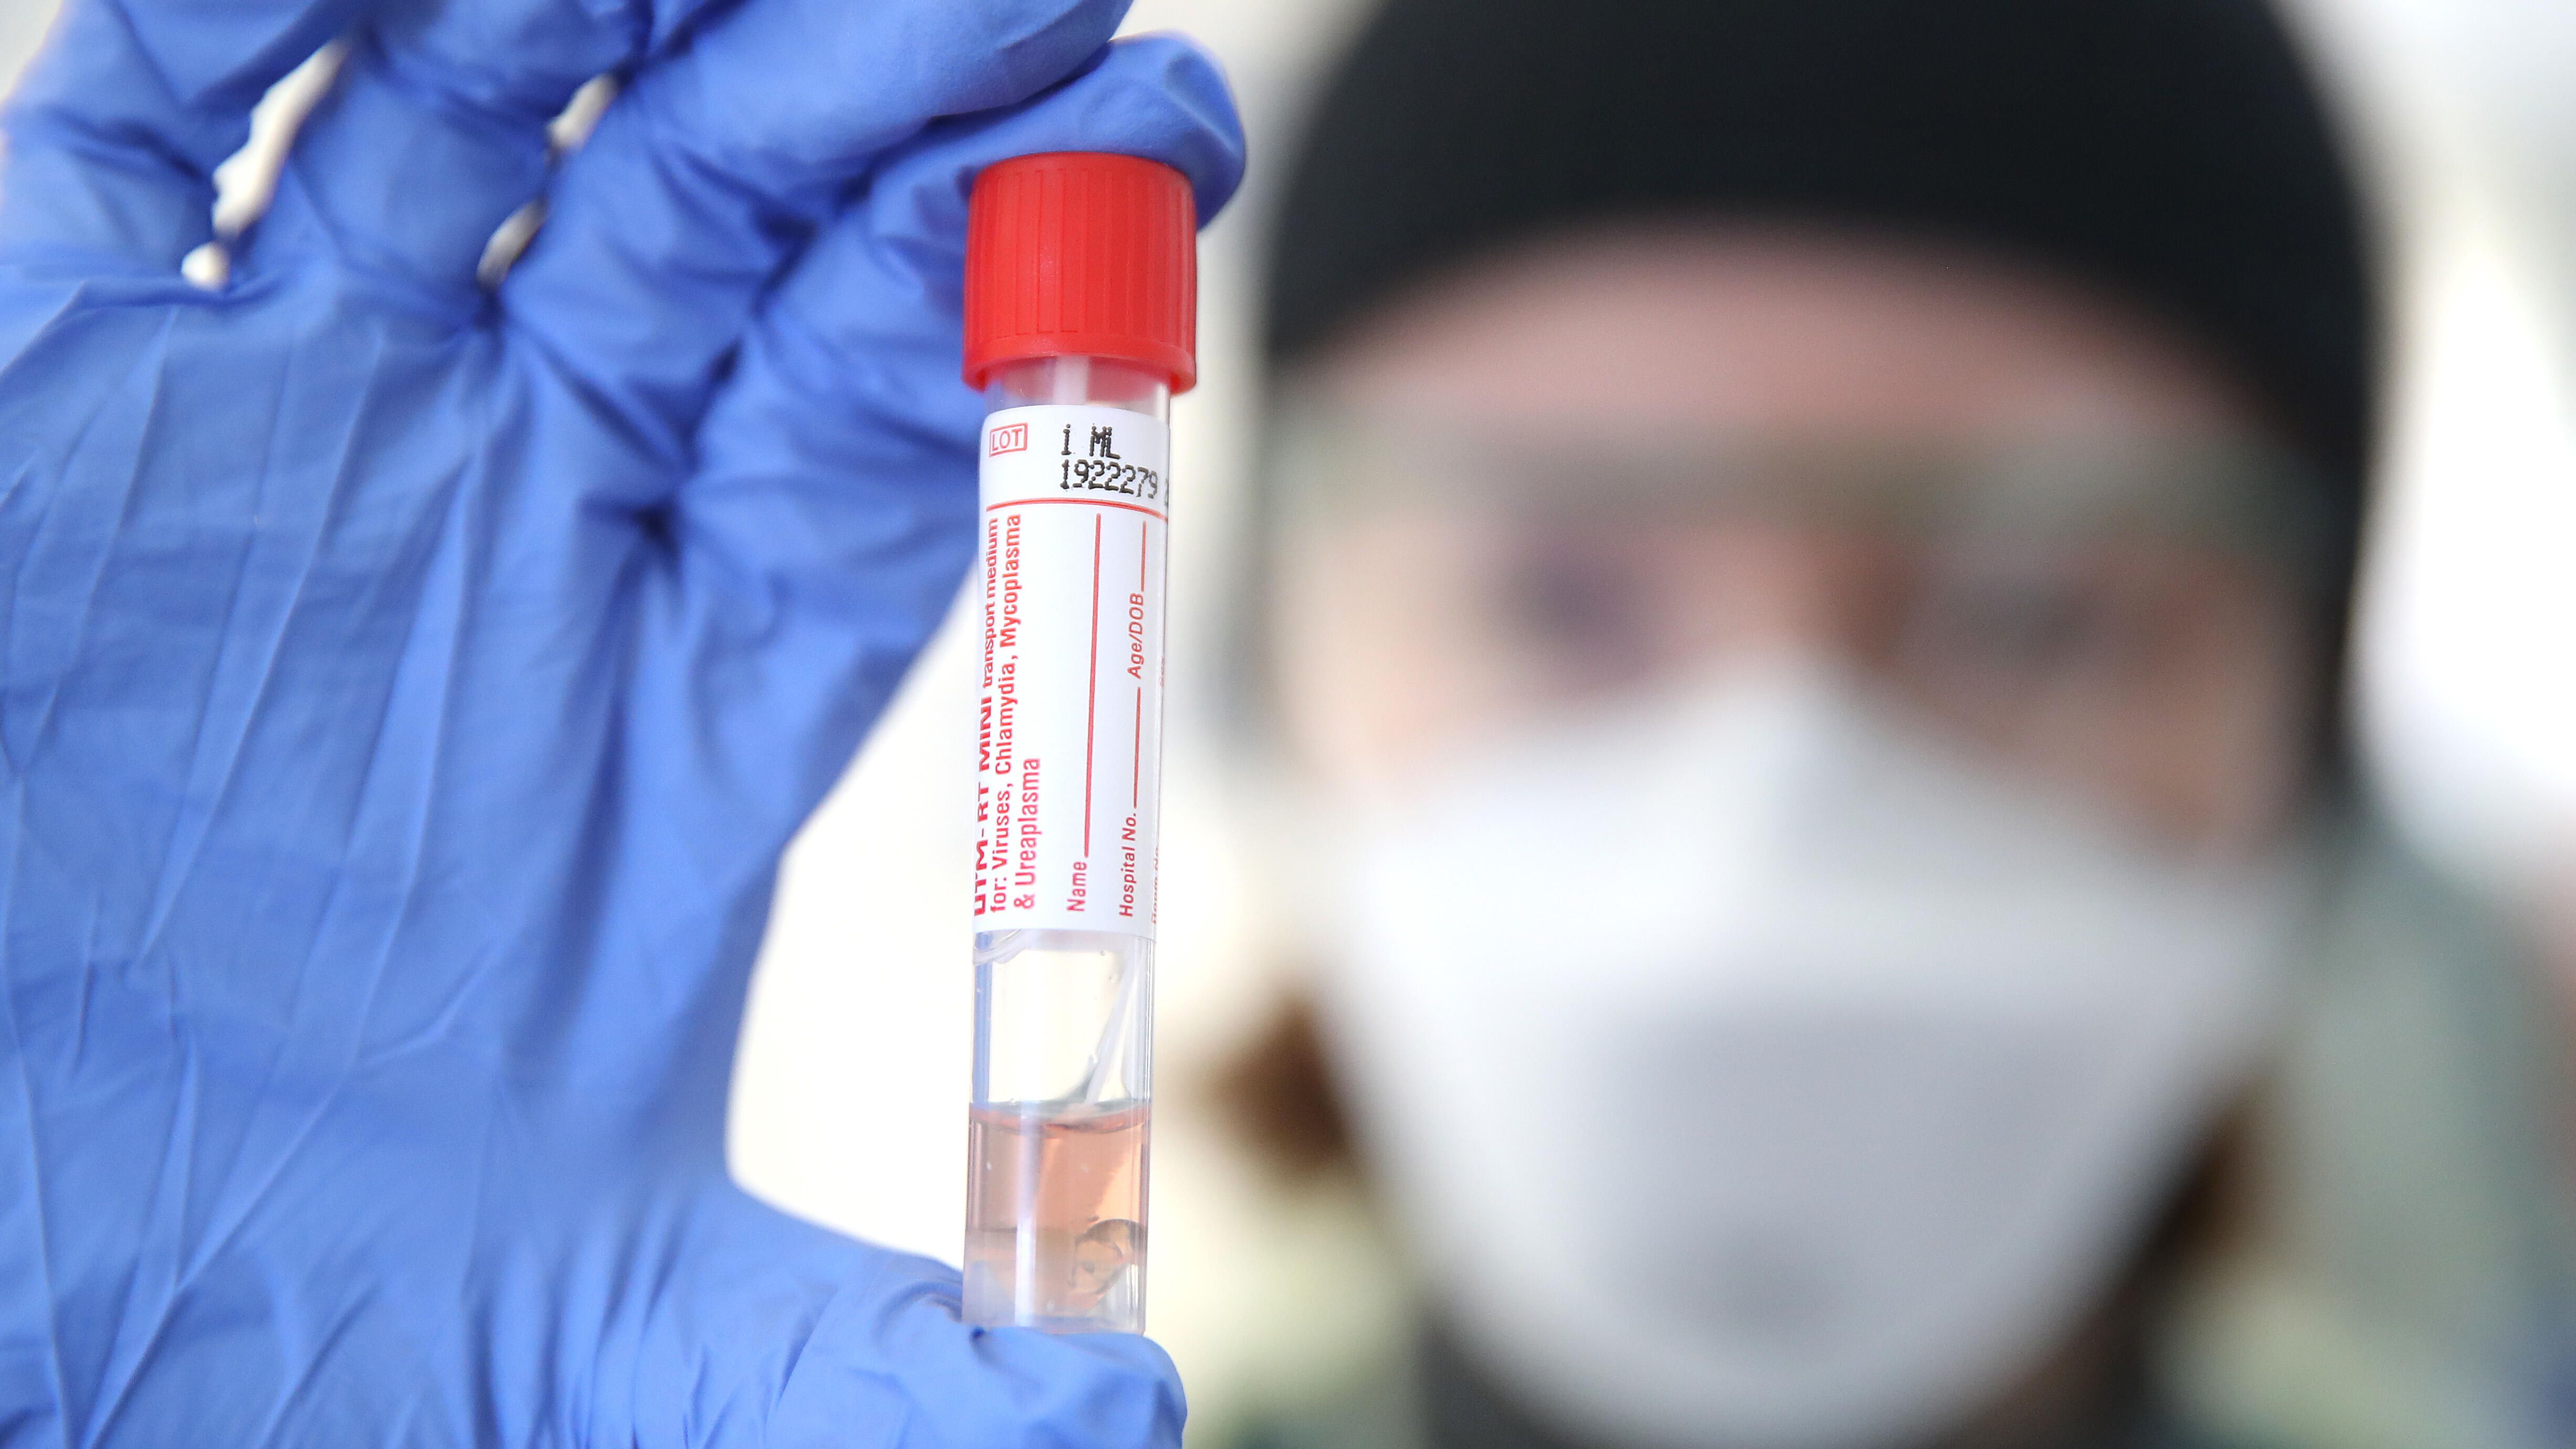 Coronavirus Antibody Nasal Swab Saliva Testing What To Know About Covid 19 Tests Cnet